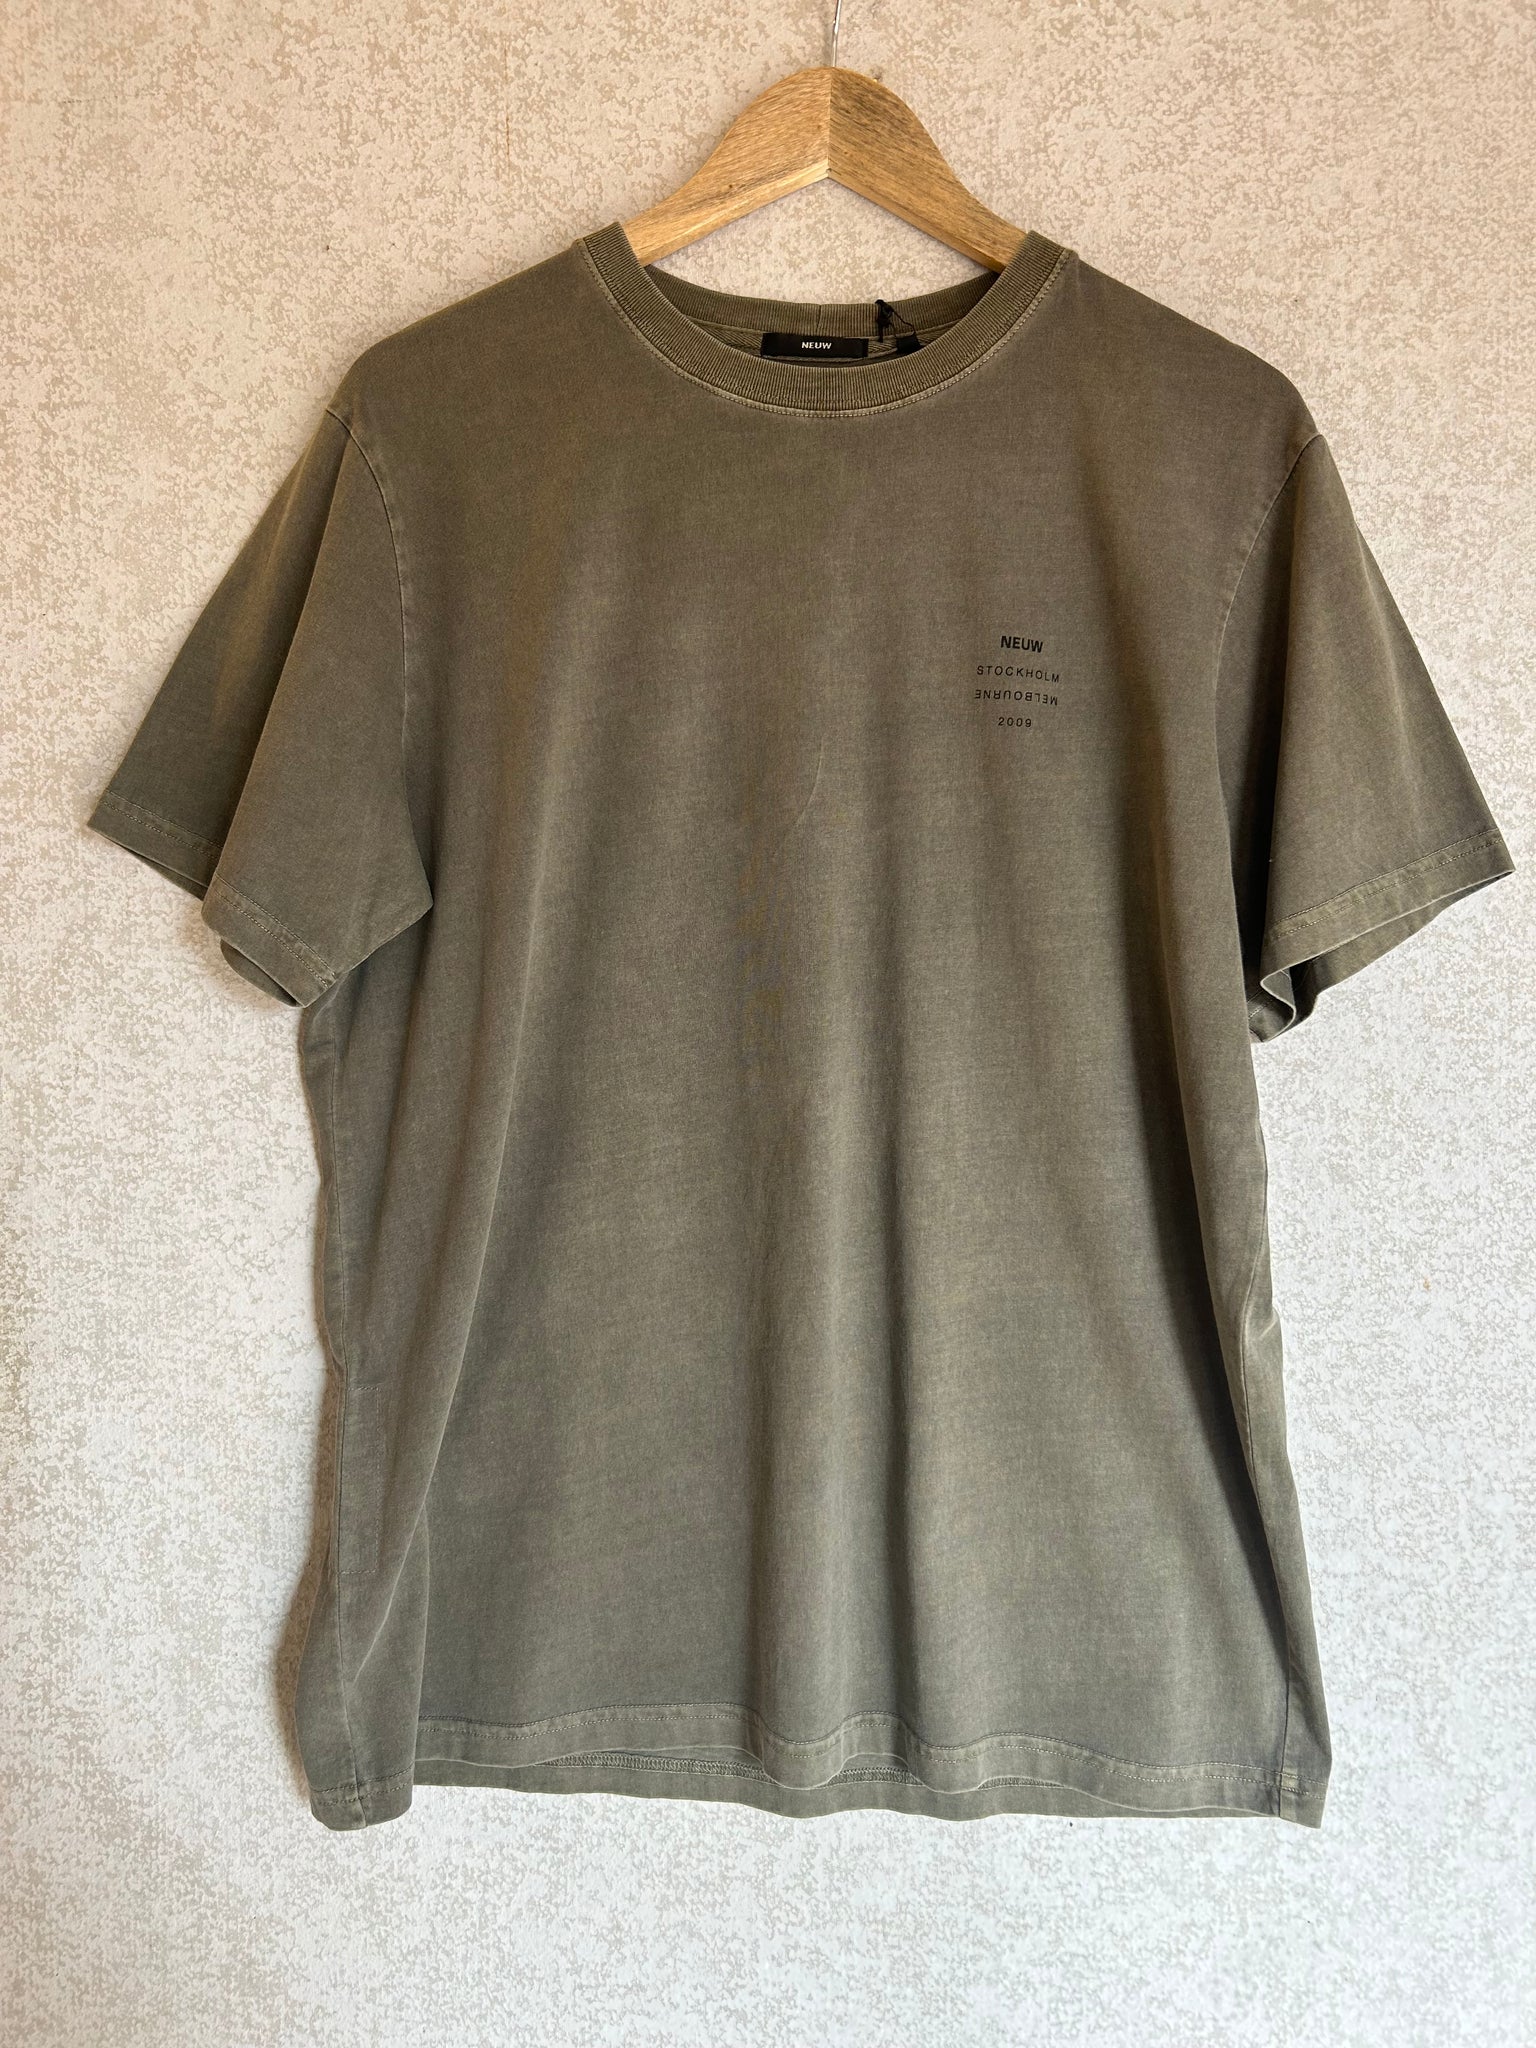 Neuw Organic Cotton T-Shirt - Size M